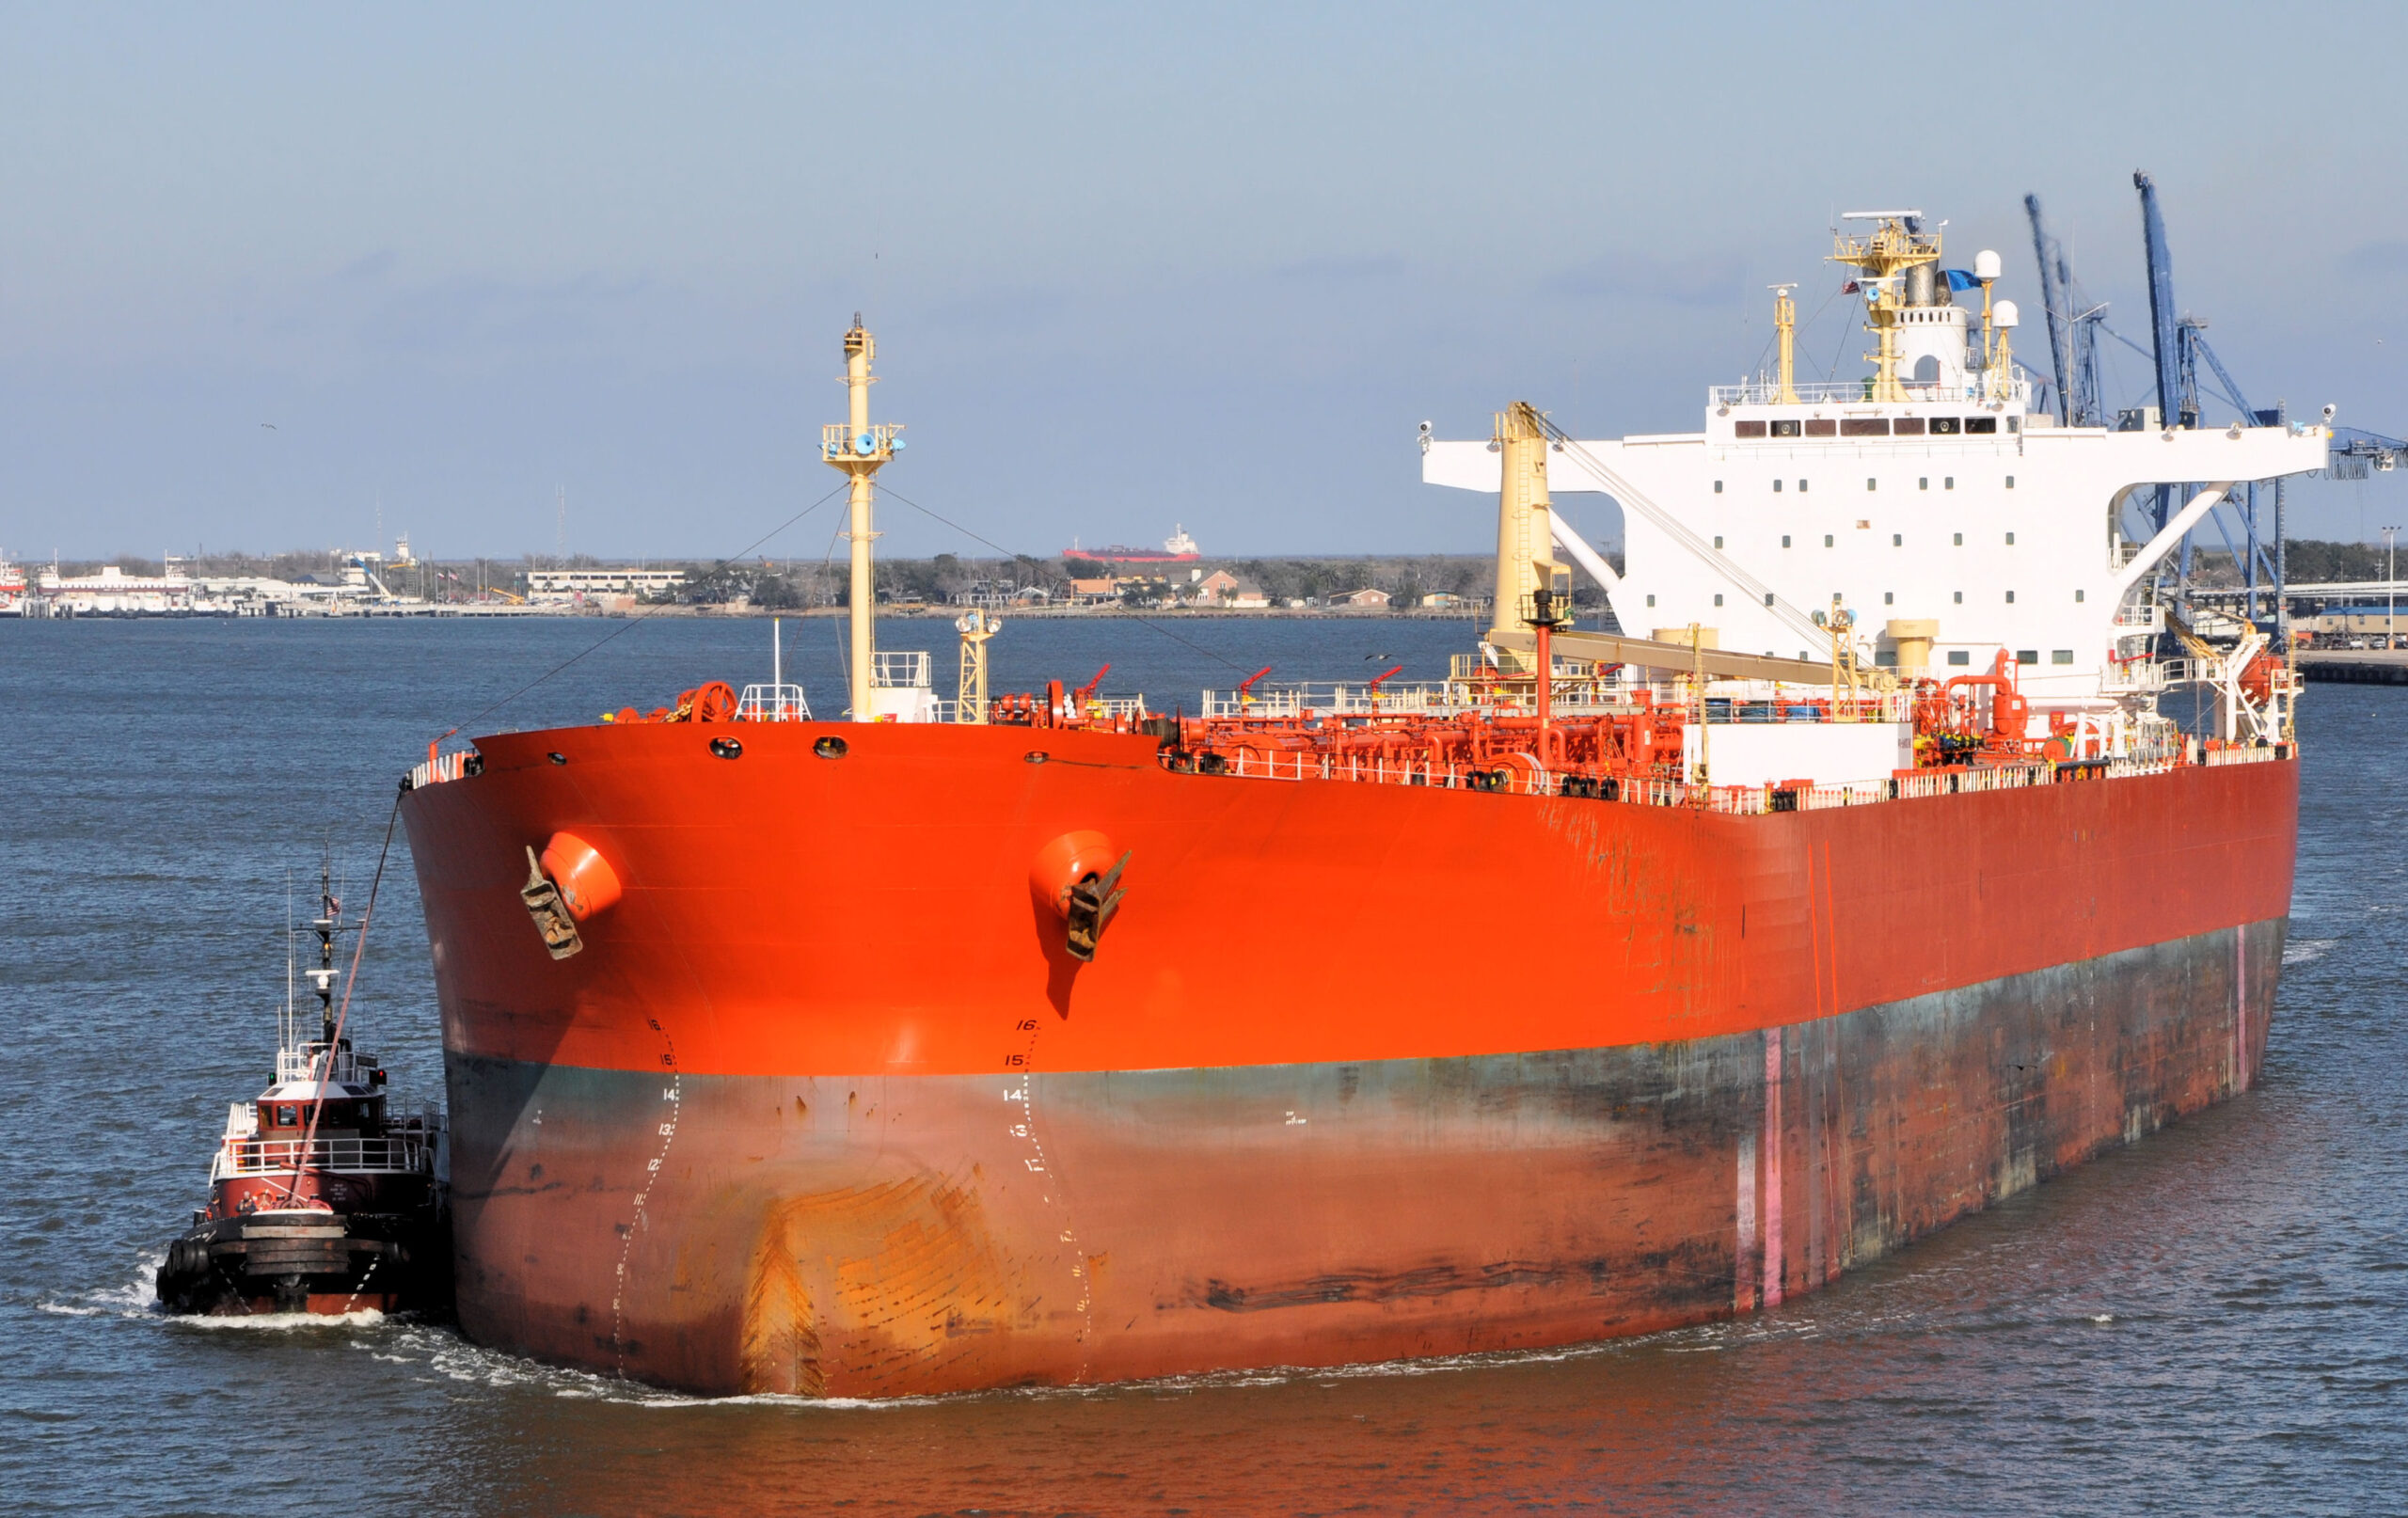 Oil tanker in ballast is arriving to Galveston Texas.